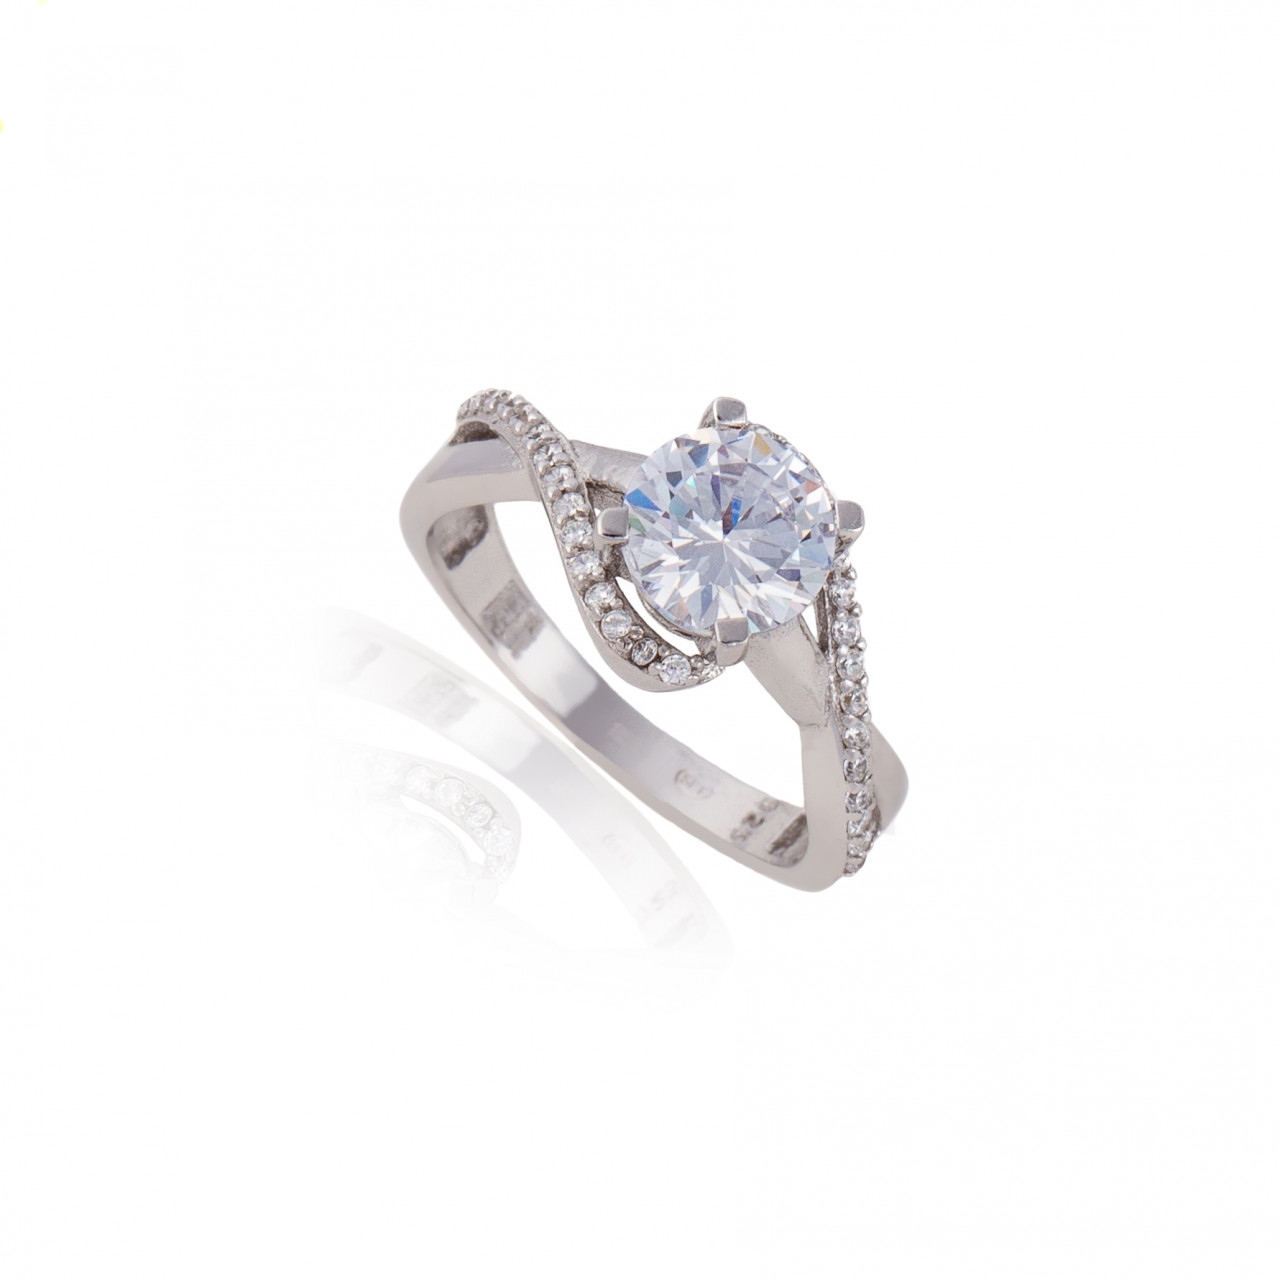 inelul de logodna si verigheta pe acelasi deget Inel de logodna din argint 925 3.5g (Marime Inel-Verigheta: M54)